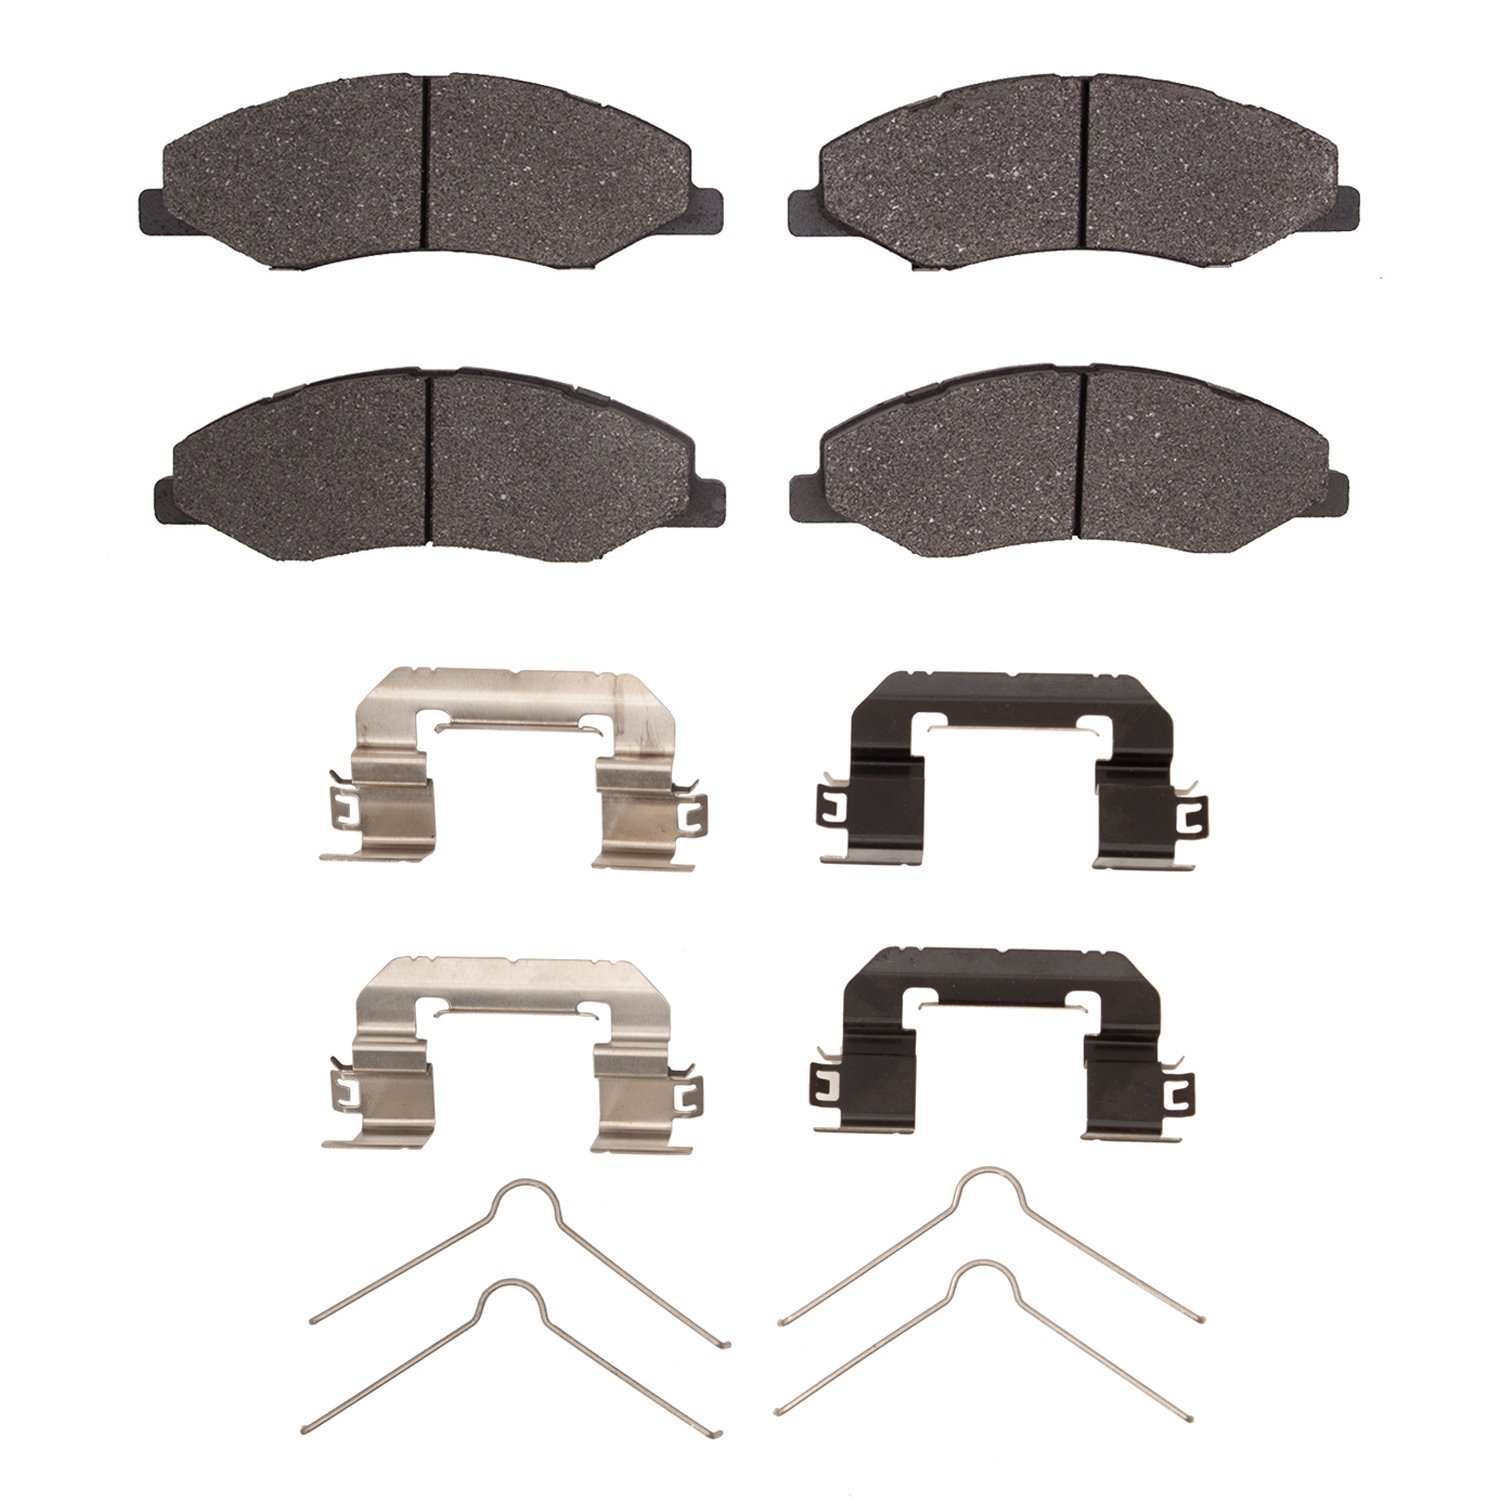 1551-2089-01 5000 Advanced Ceramic Brake Pads & Hardware Kit, Fits Select Acura/Honda, Position: Front